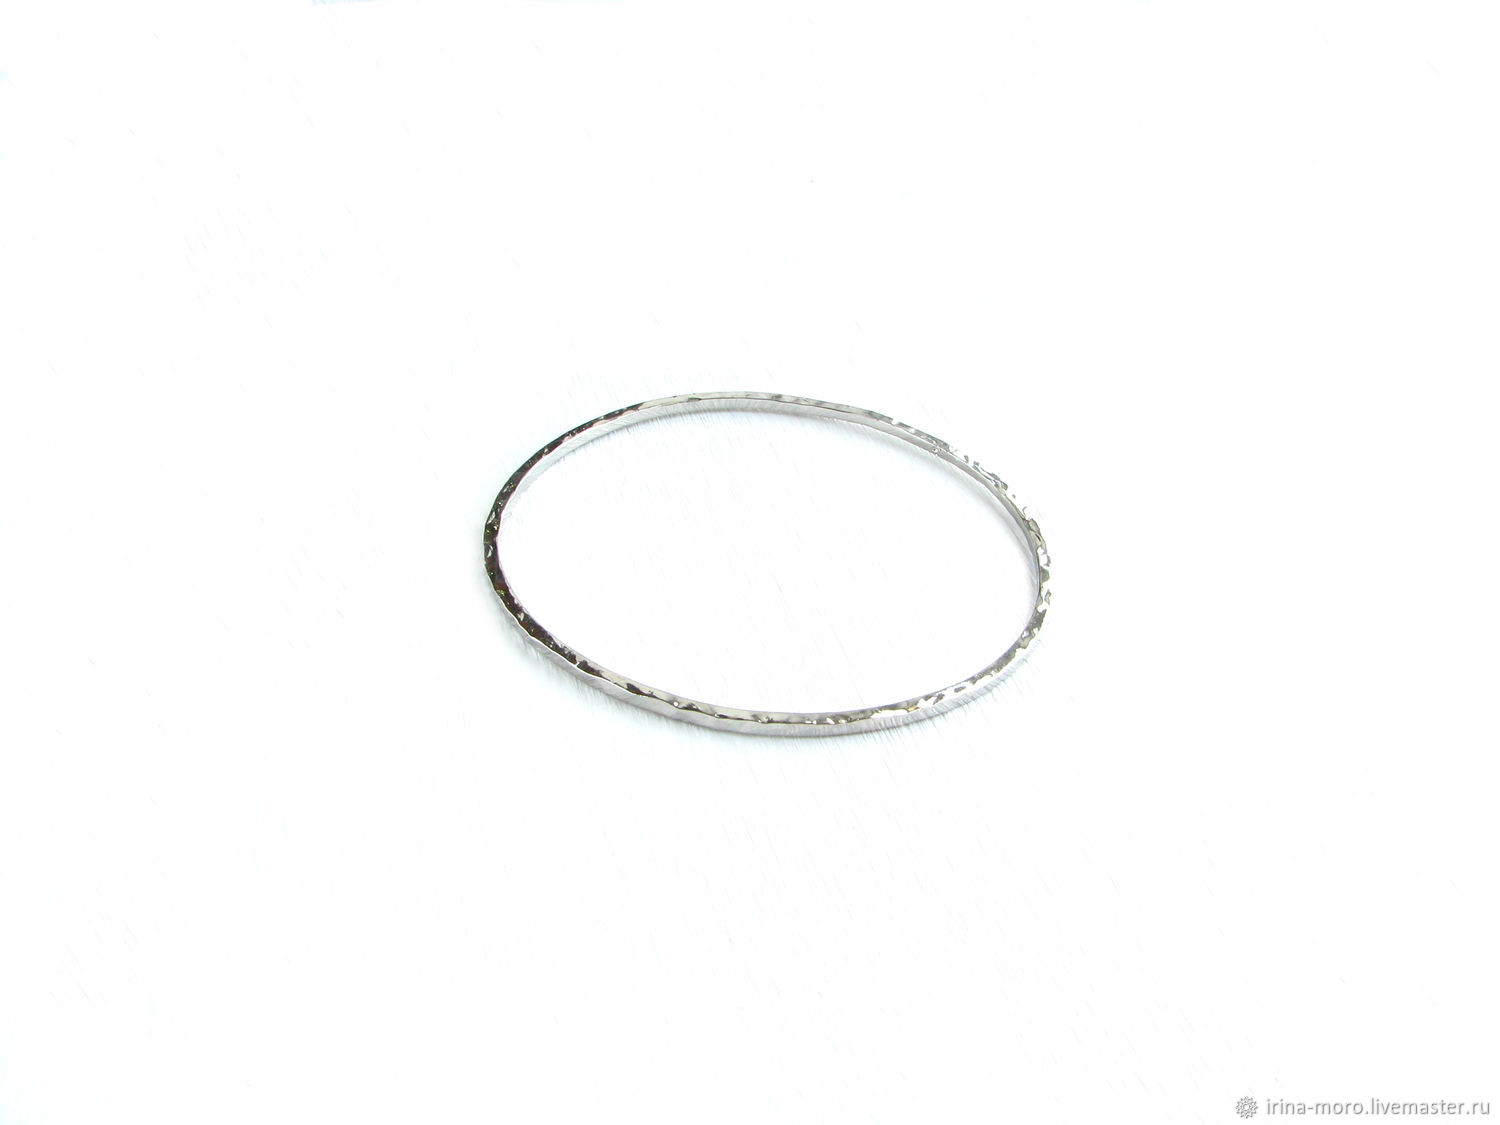 Silver round bracelet, hard bracelet fashionable 